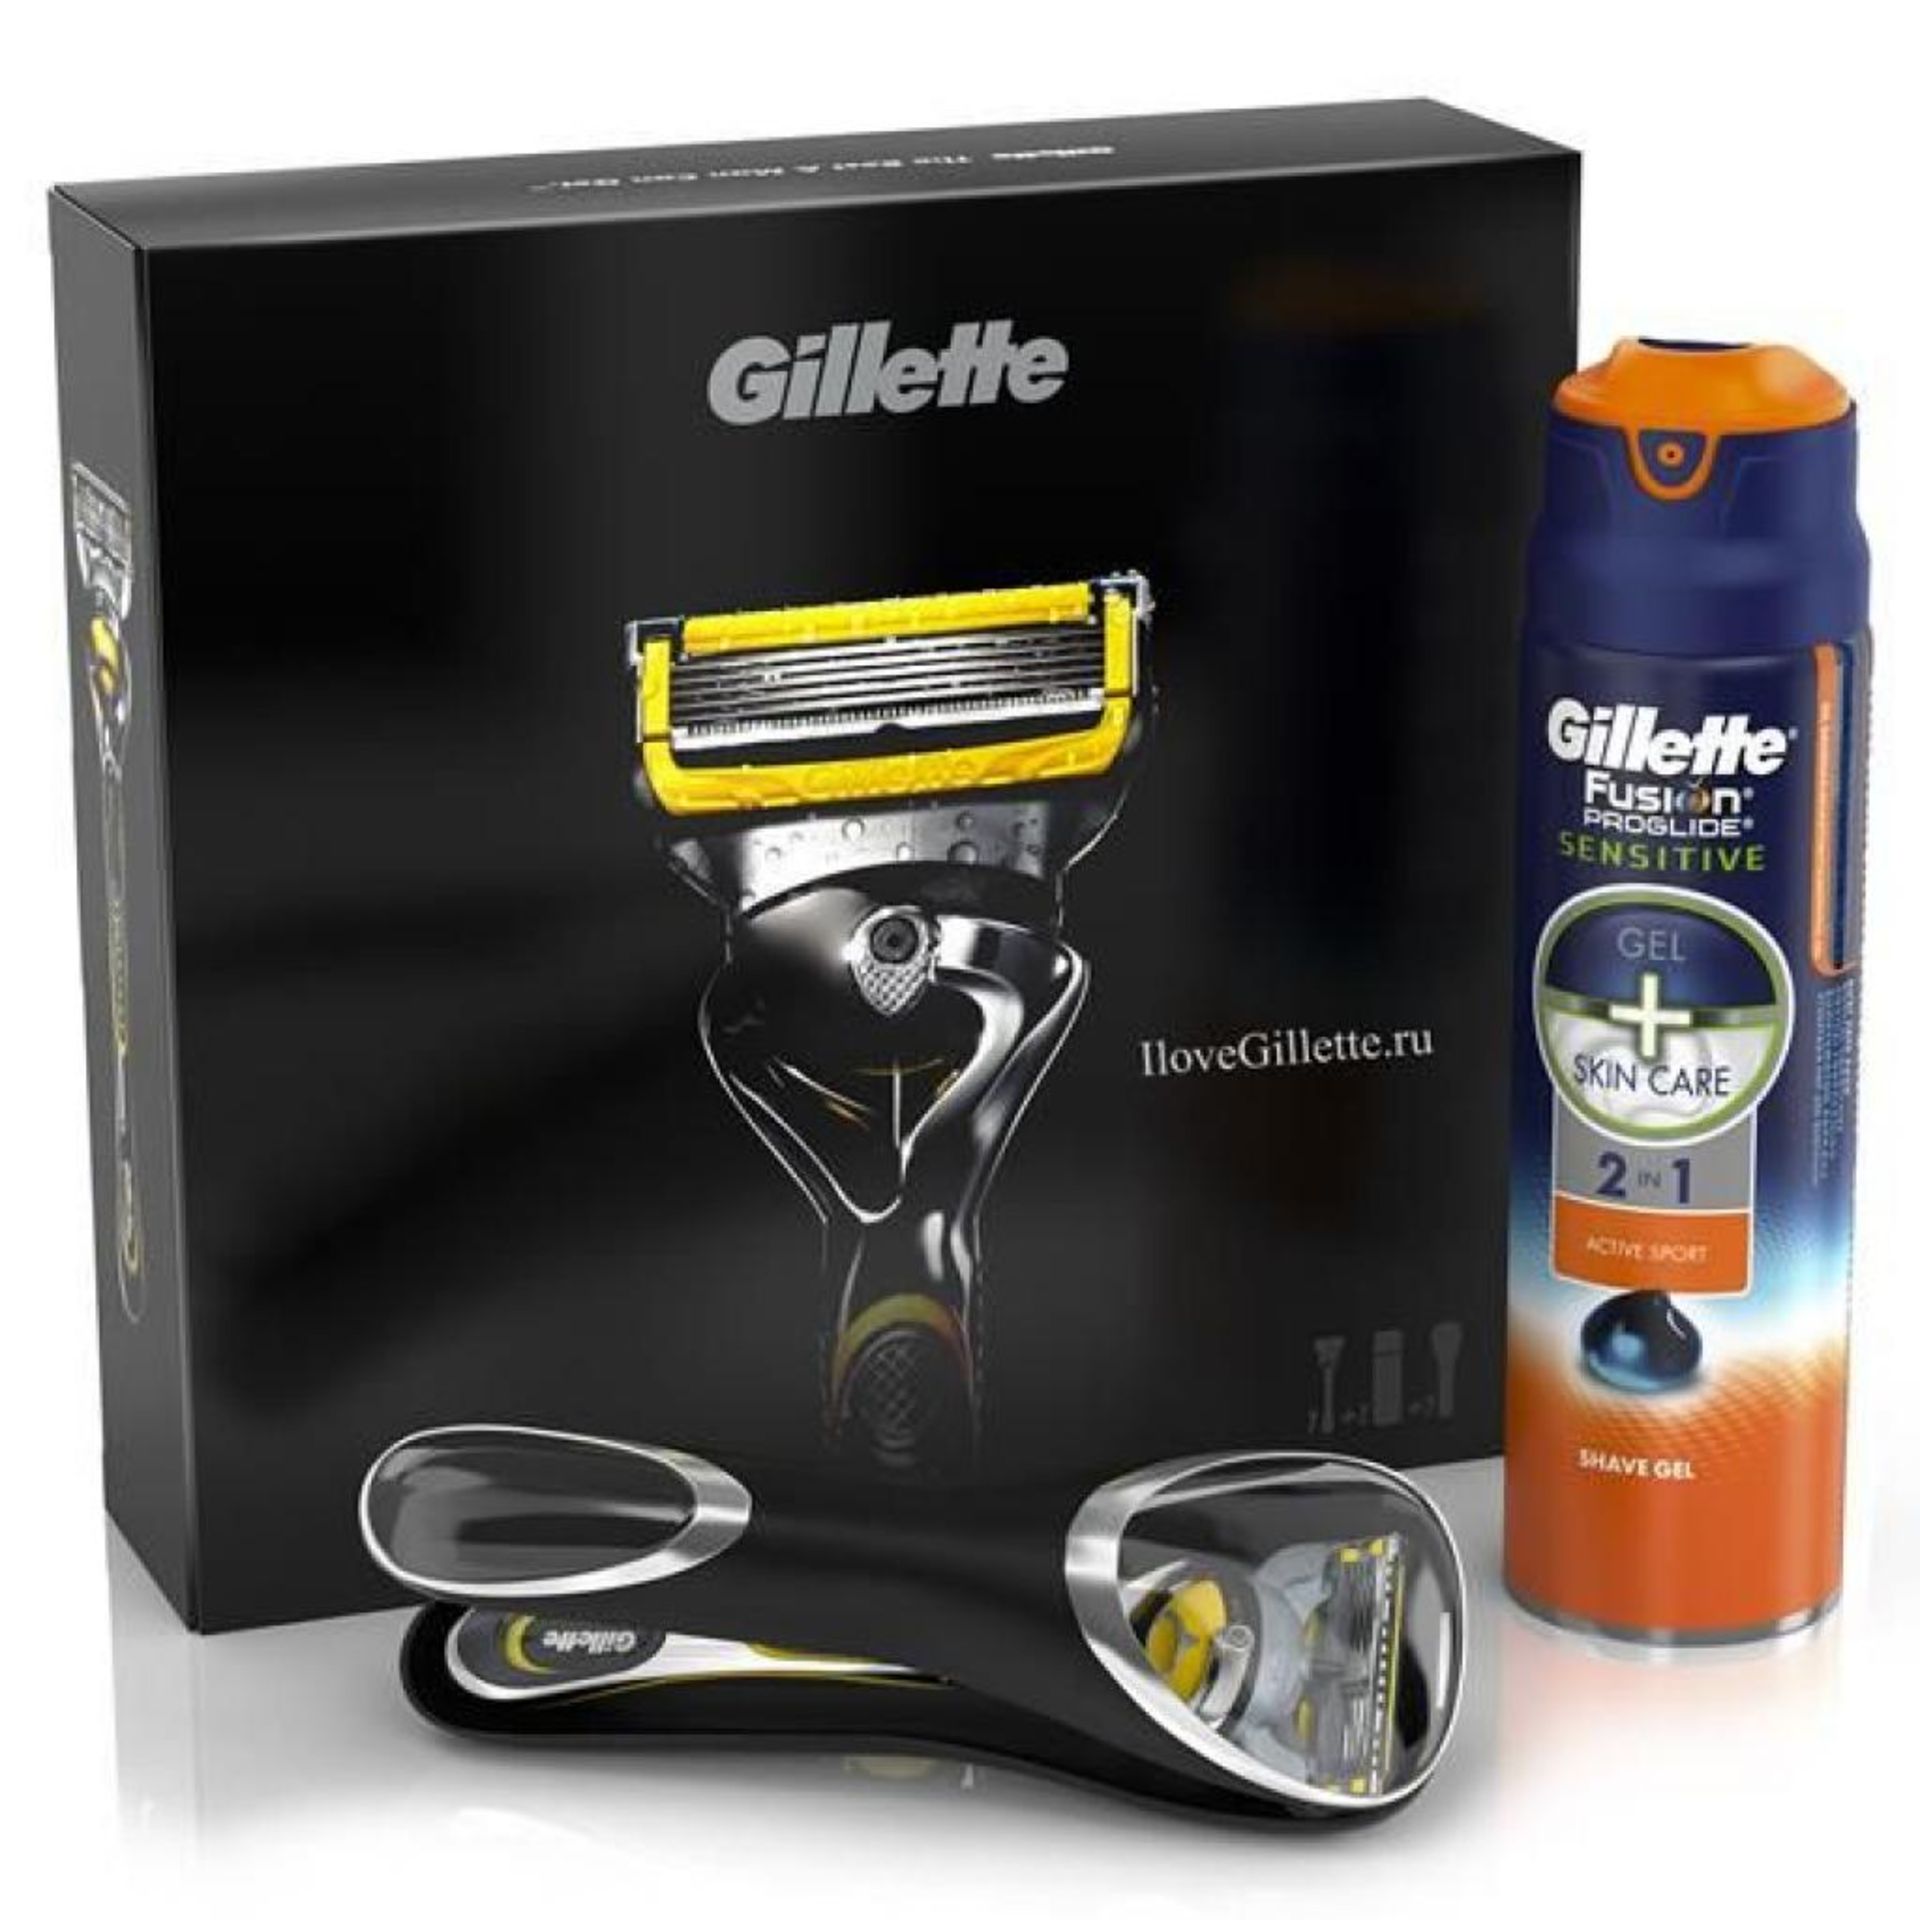 V Brand New Gillette Fusion Proshield Razor & Holder Plus Sensitive Gel + Skincare Active Sport In